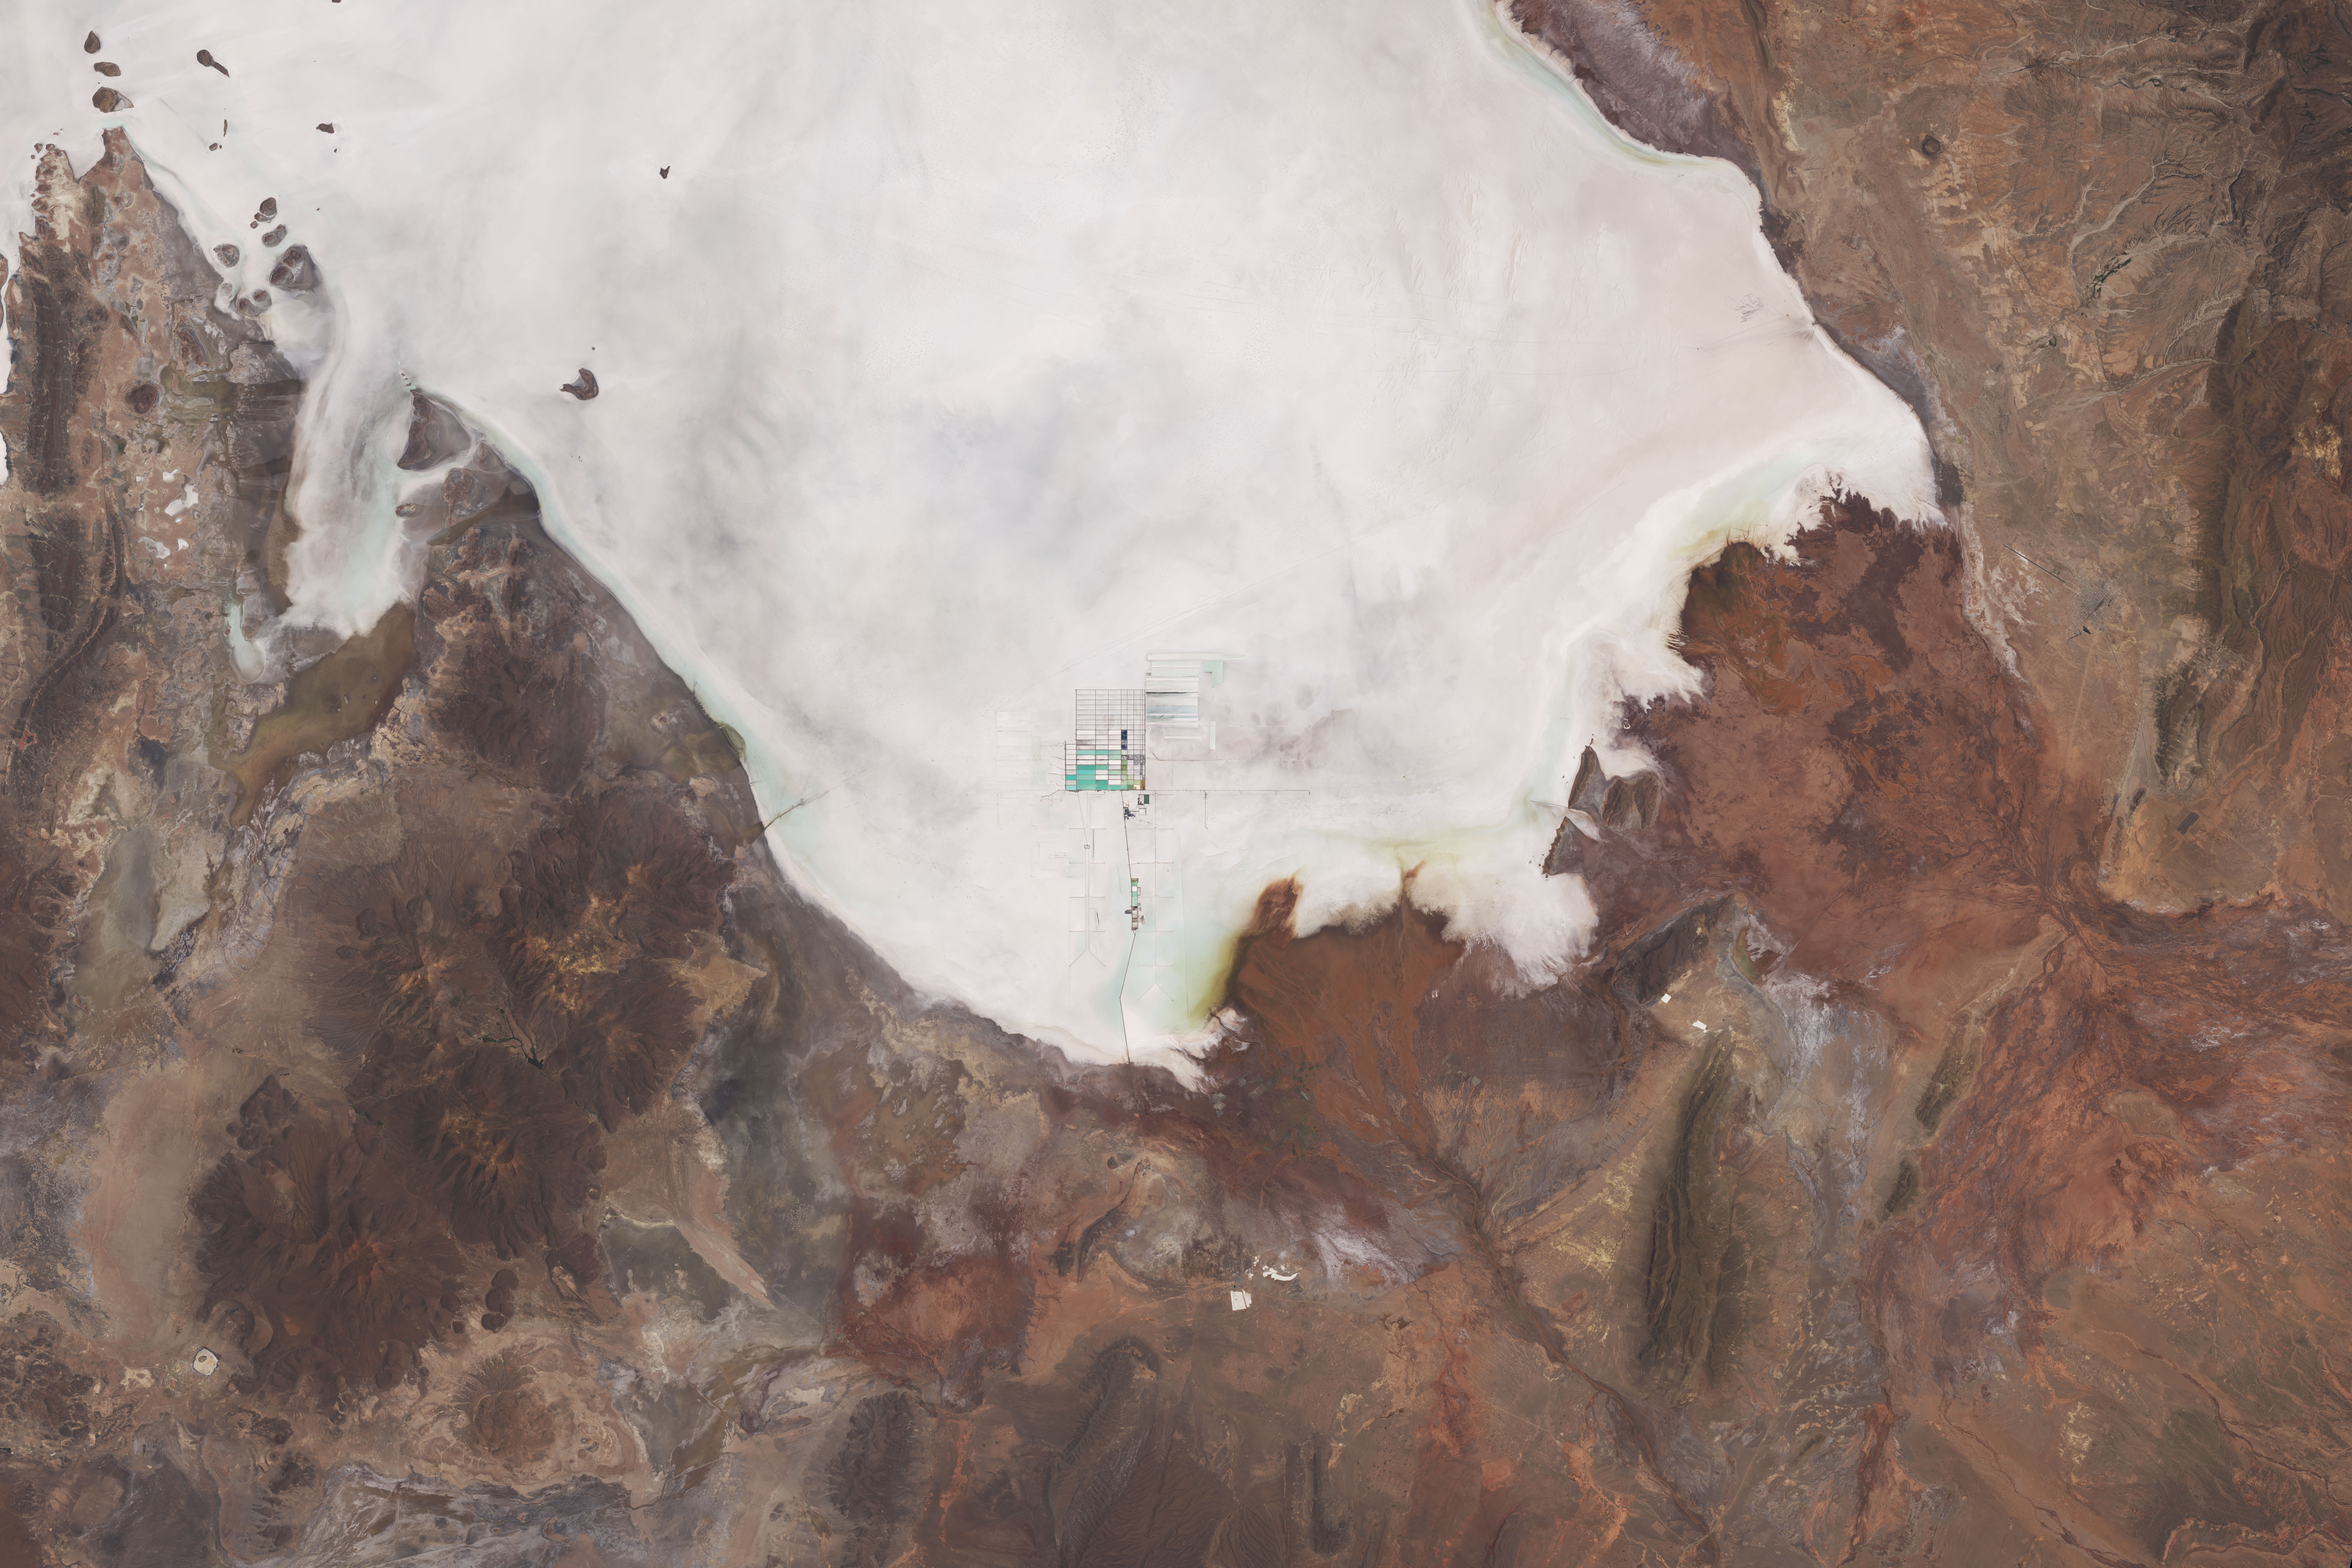 Lithium Harvesting at Salar de Uyuni - related image preview